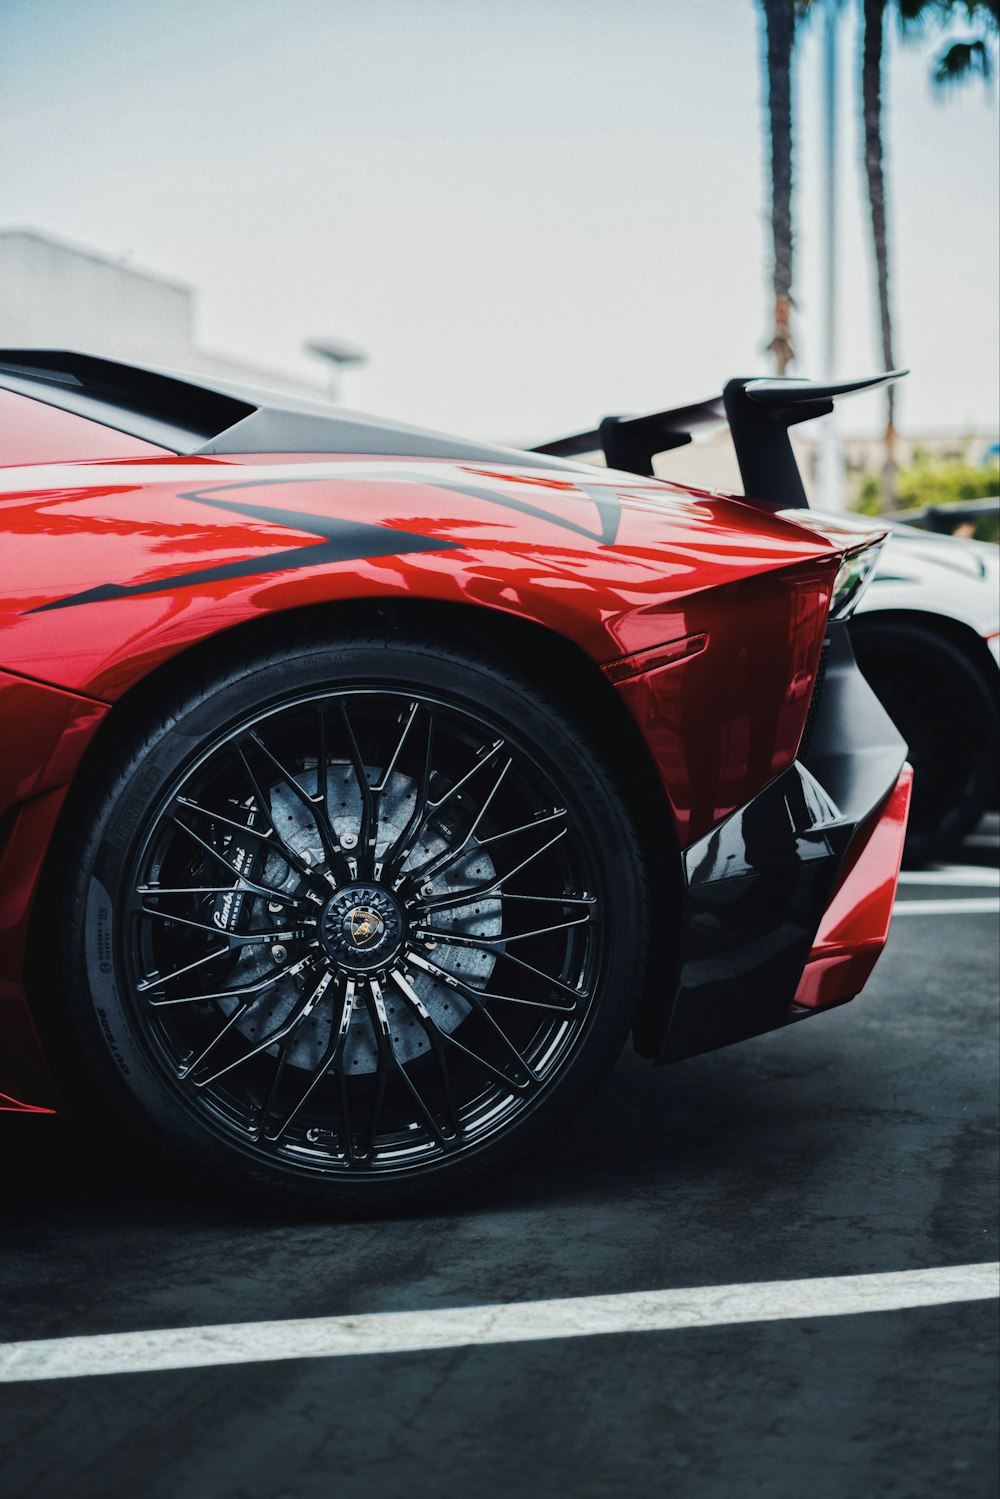 black and red Lamborghini Aventador SV rear left side